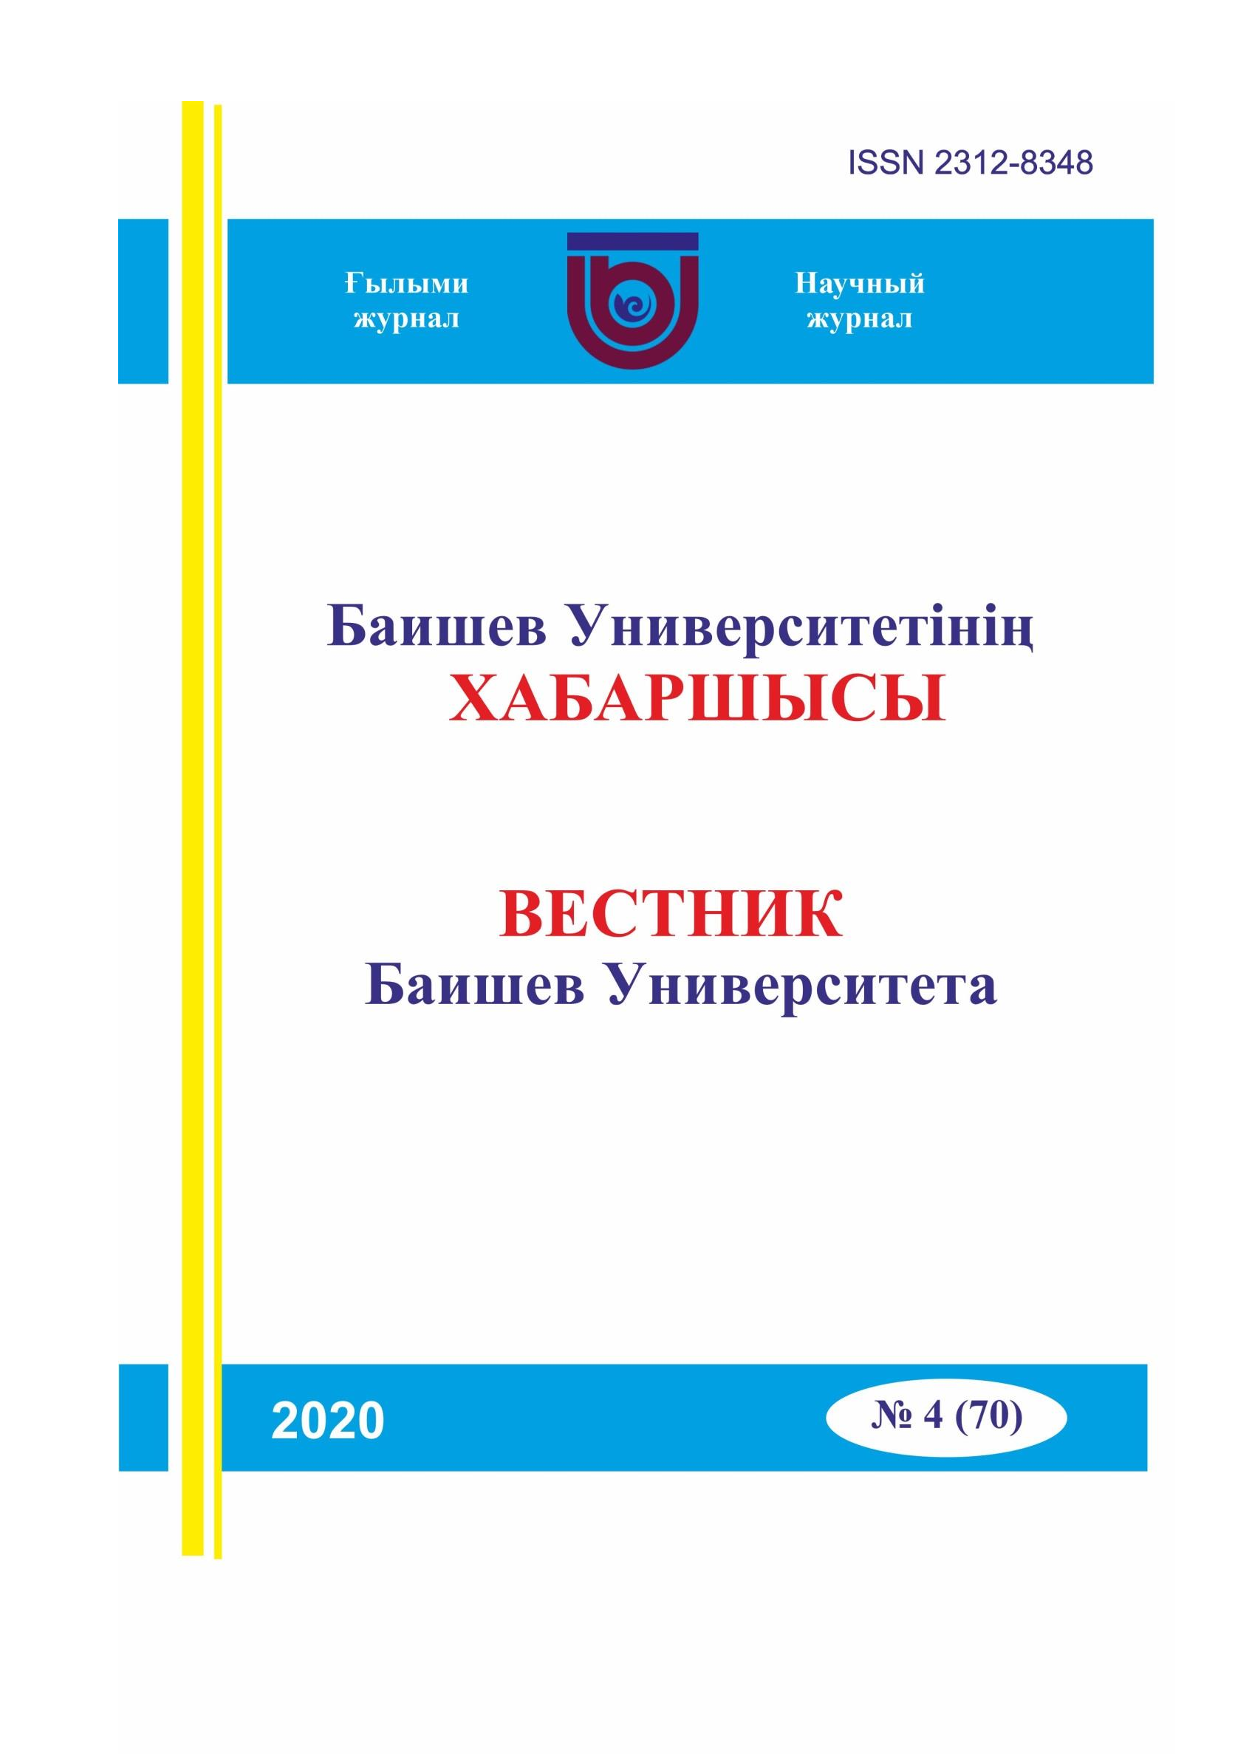 Вестник Баишев Университета №4(70) 2020г